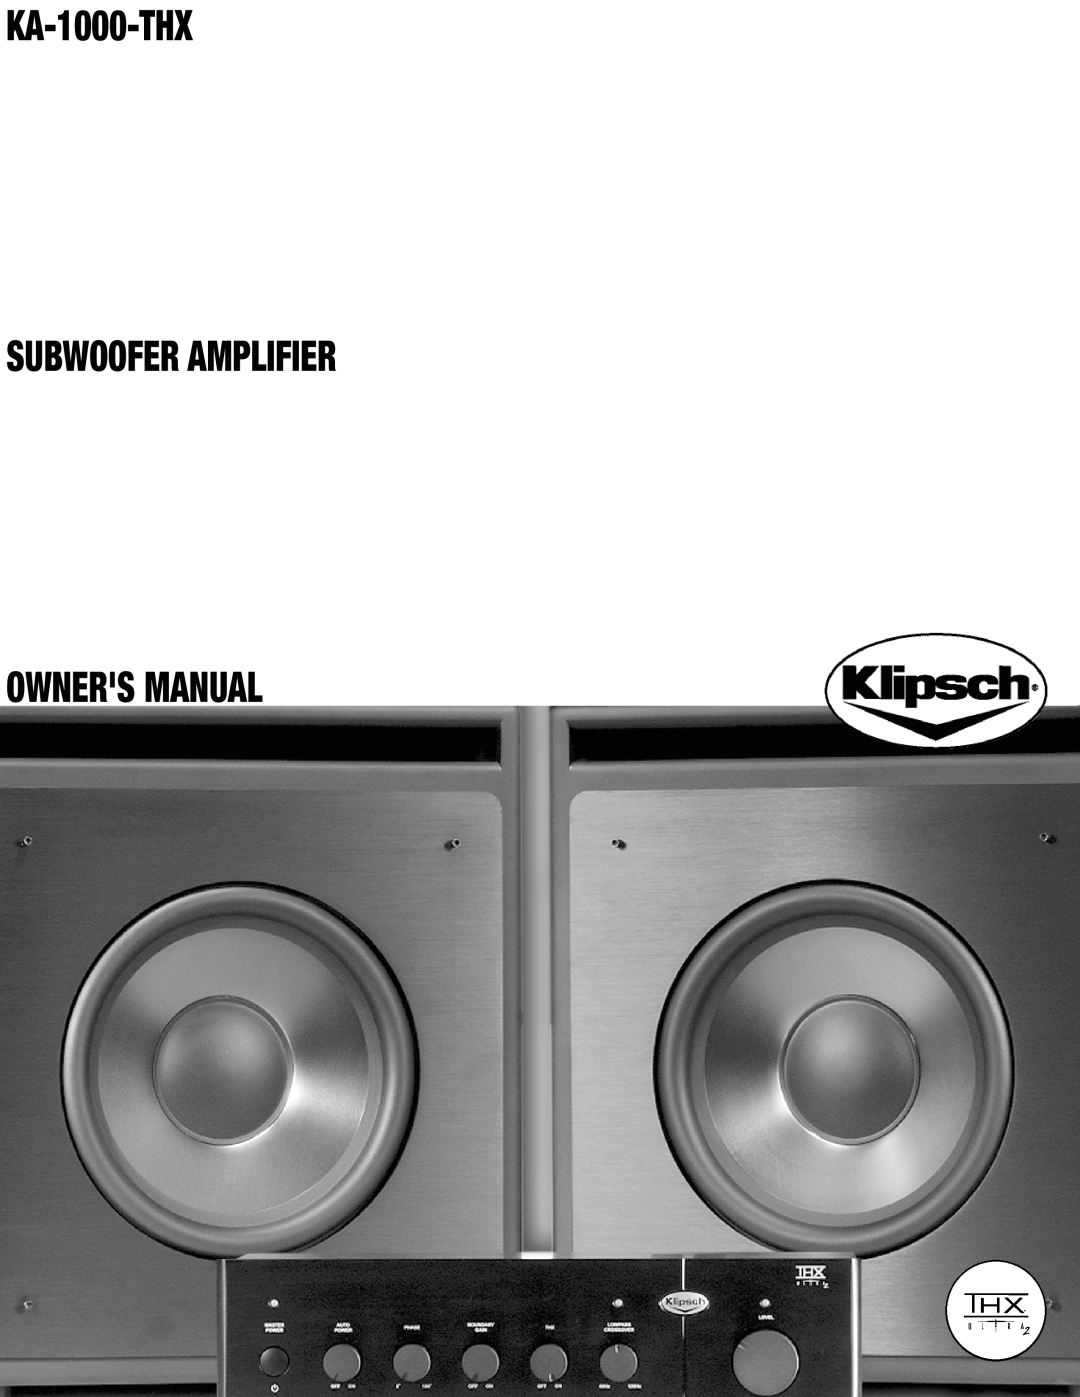 Klipsch owner manual KA-1000-THX SUBWOOFER AMPLIFIER OWNERS MANUAL 